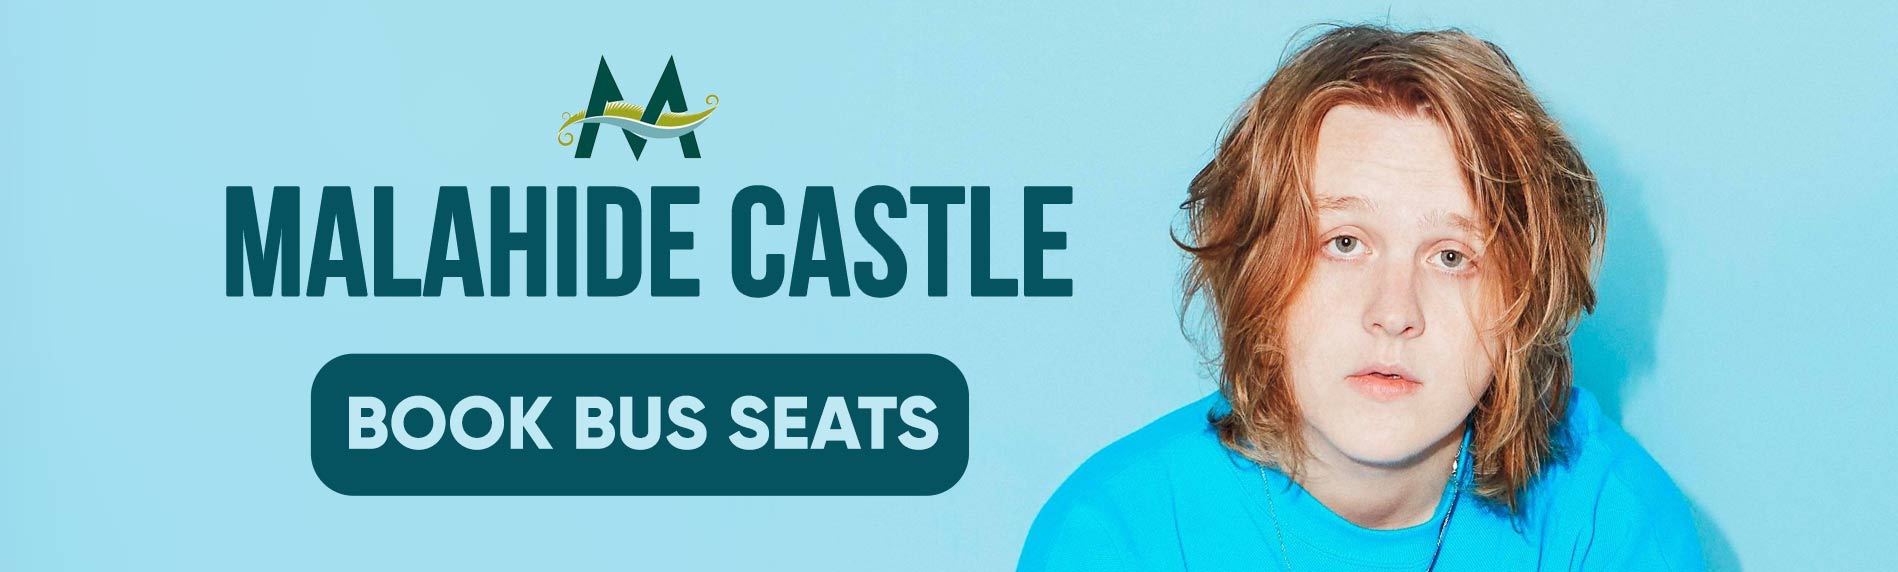 Bus To Lewis Capaldi malahide castle 2020